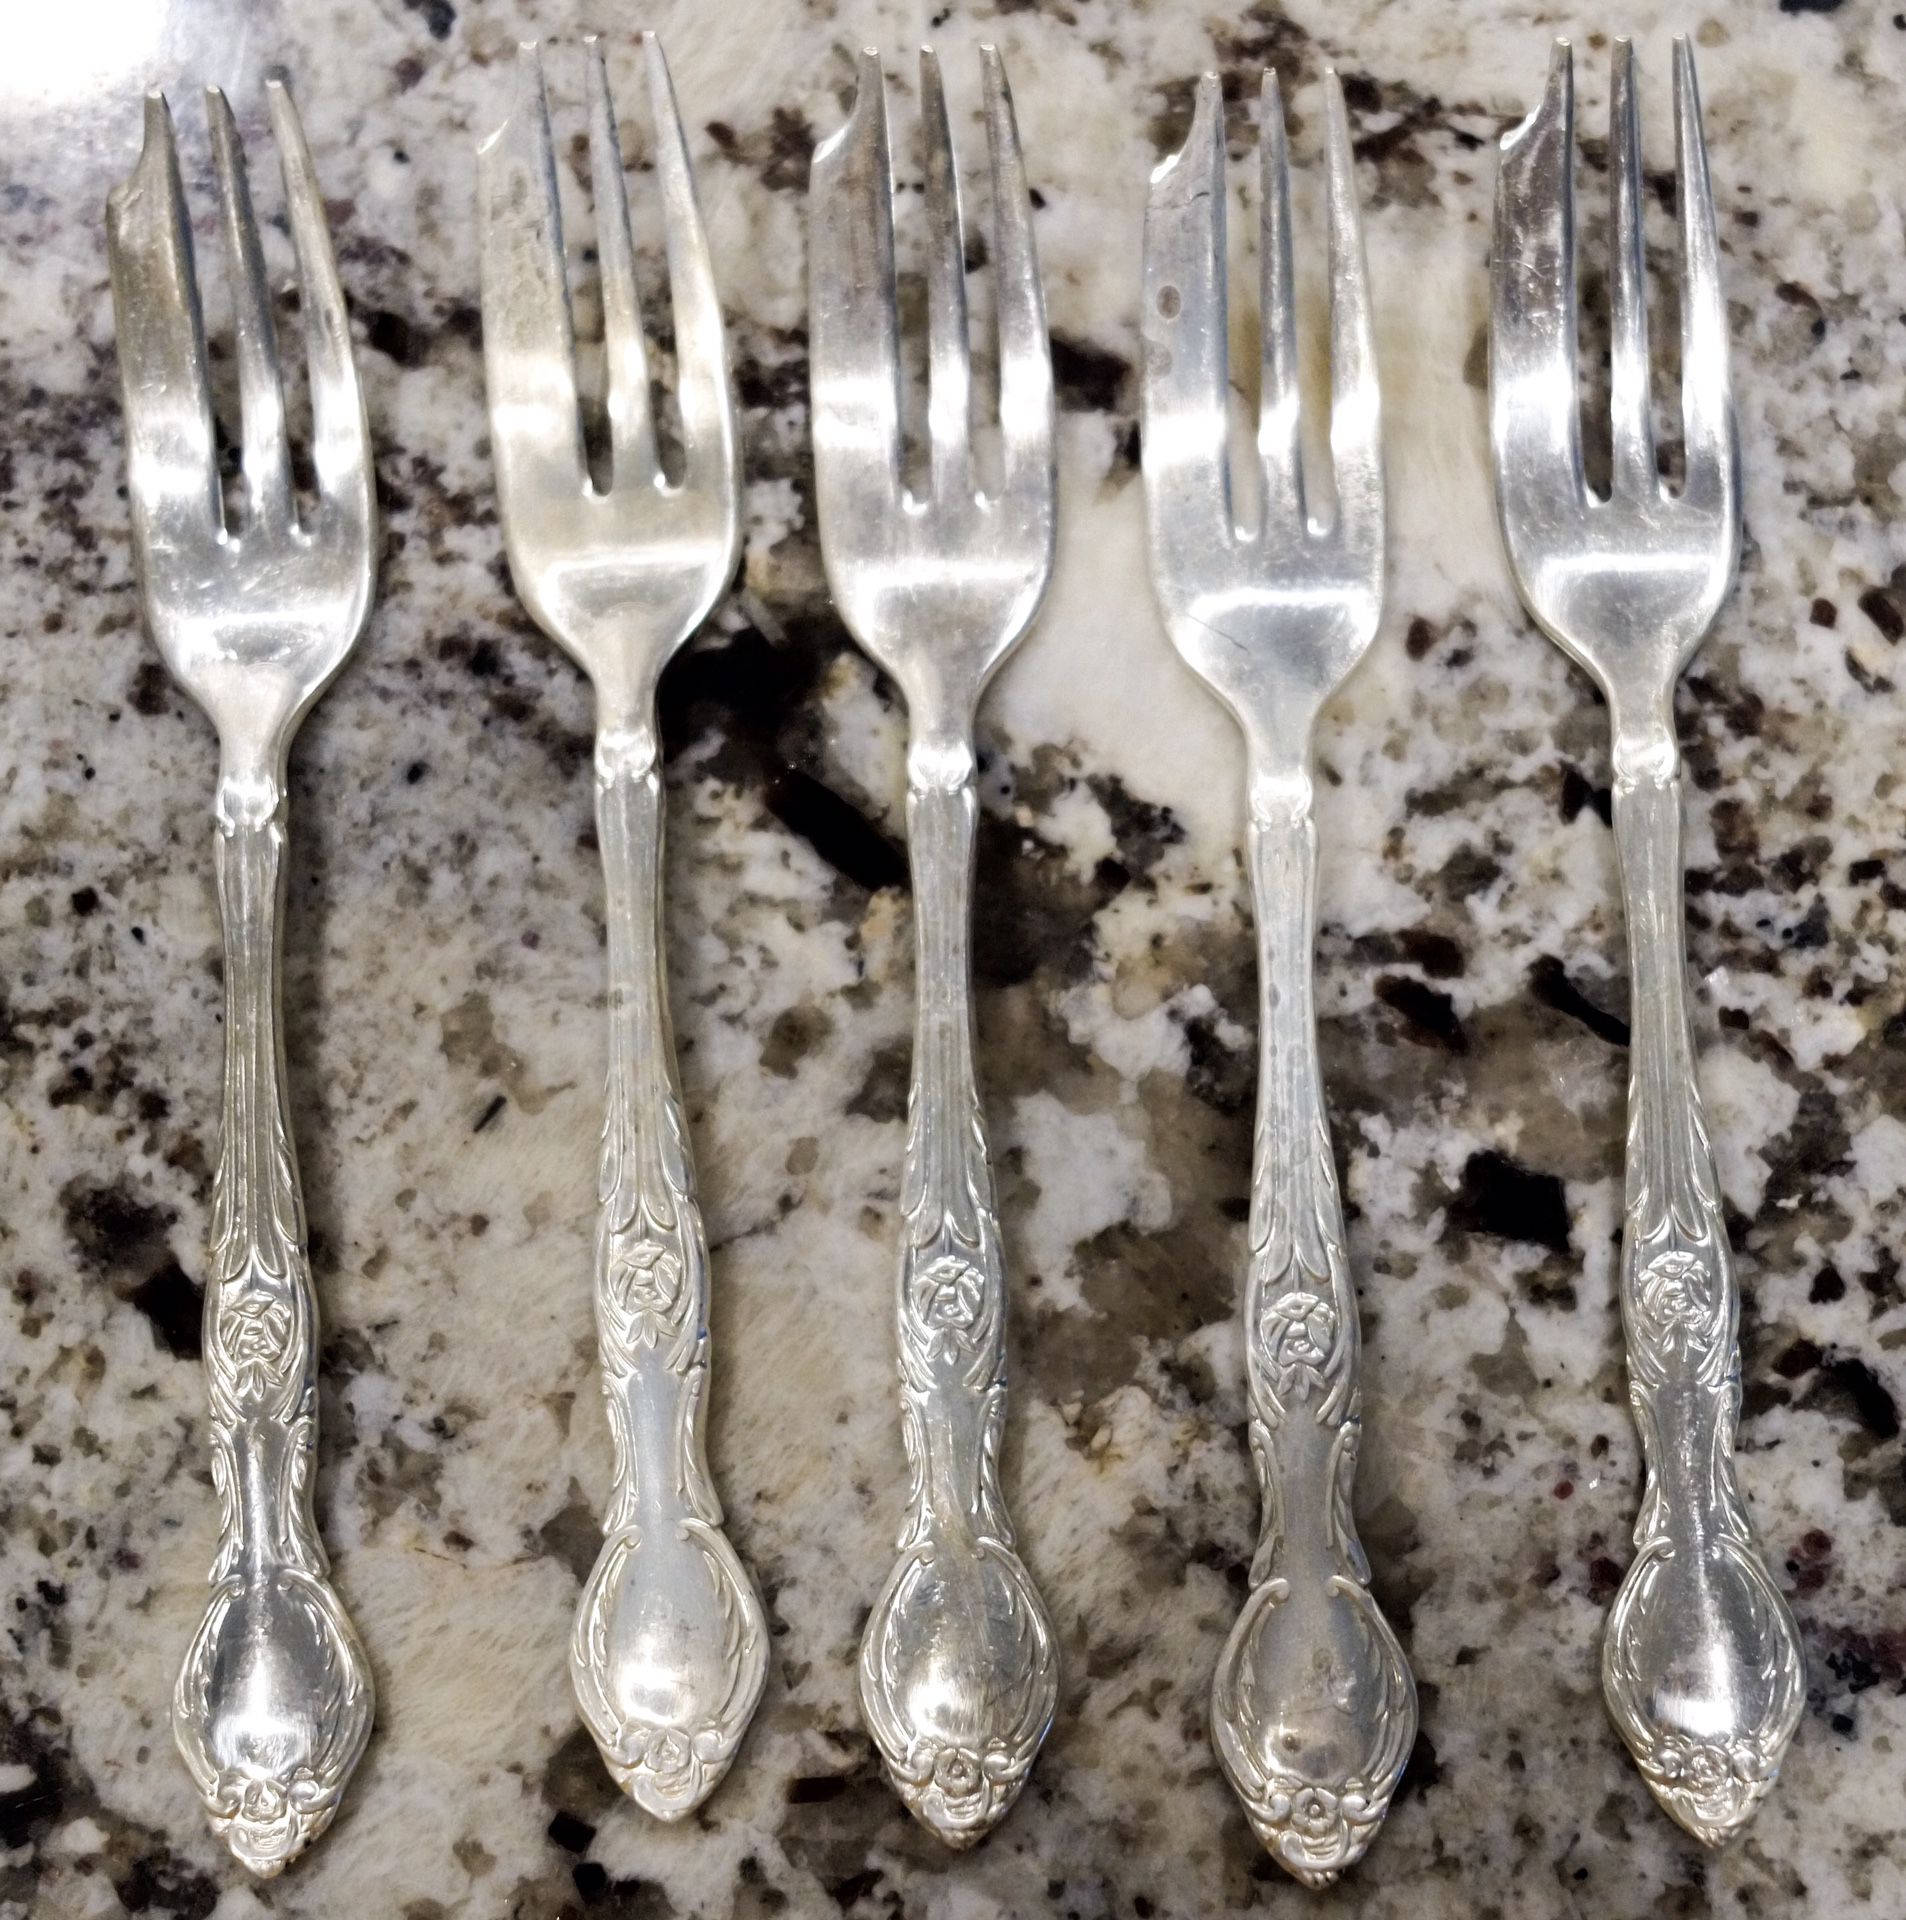 Vintage Silver Plated Cake Forks Grosvenor Gainsborough EPNS A1 (Set Of 5)